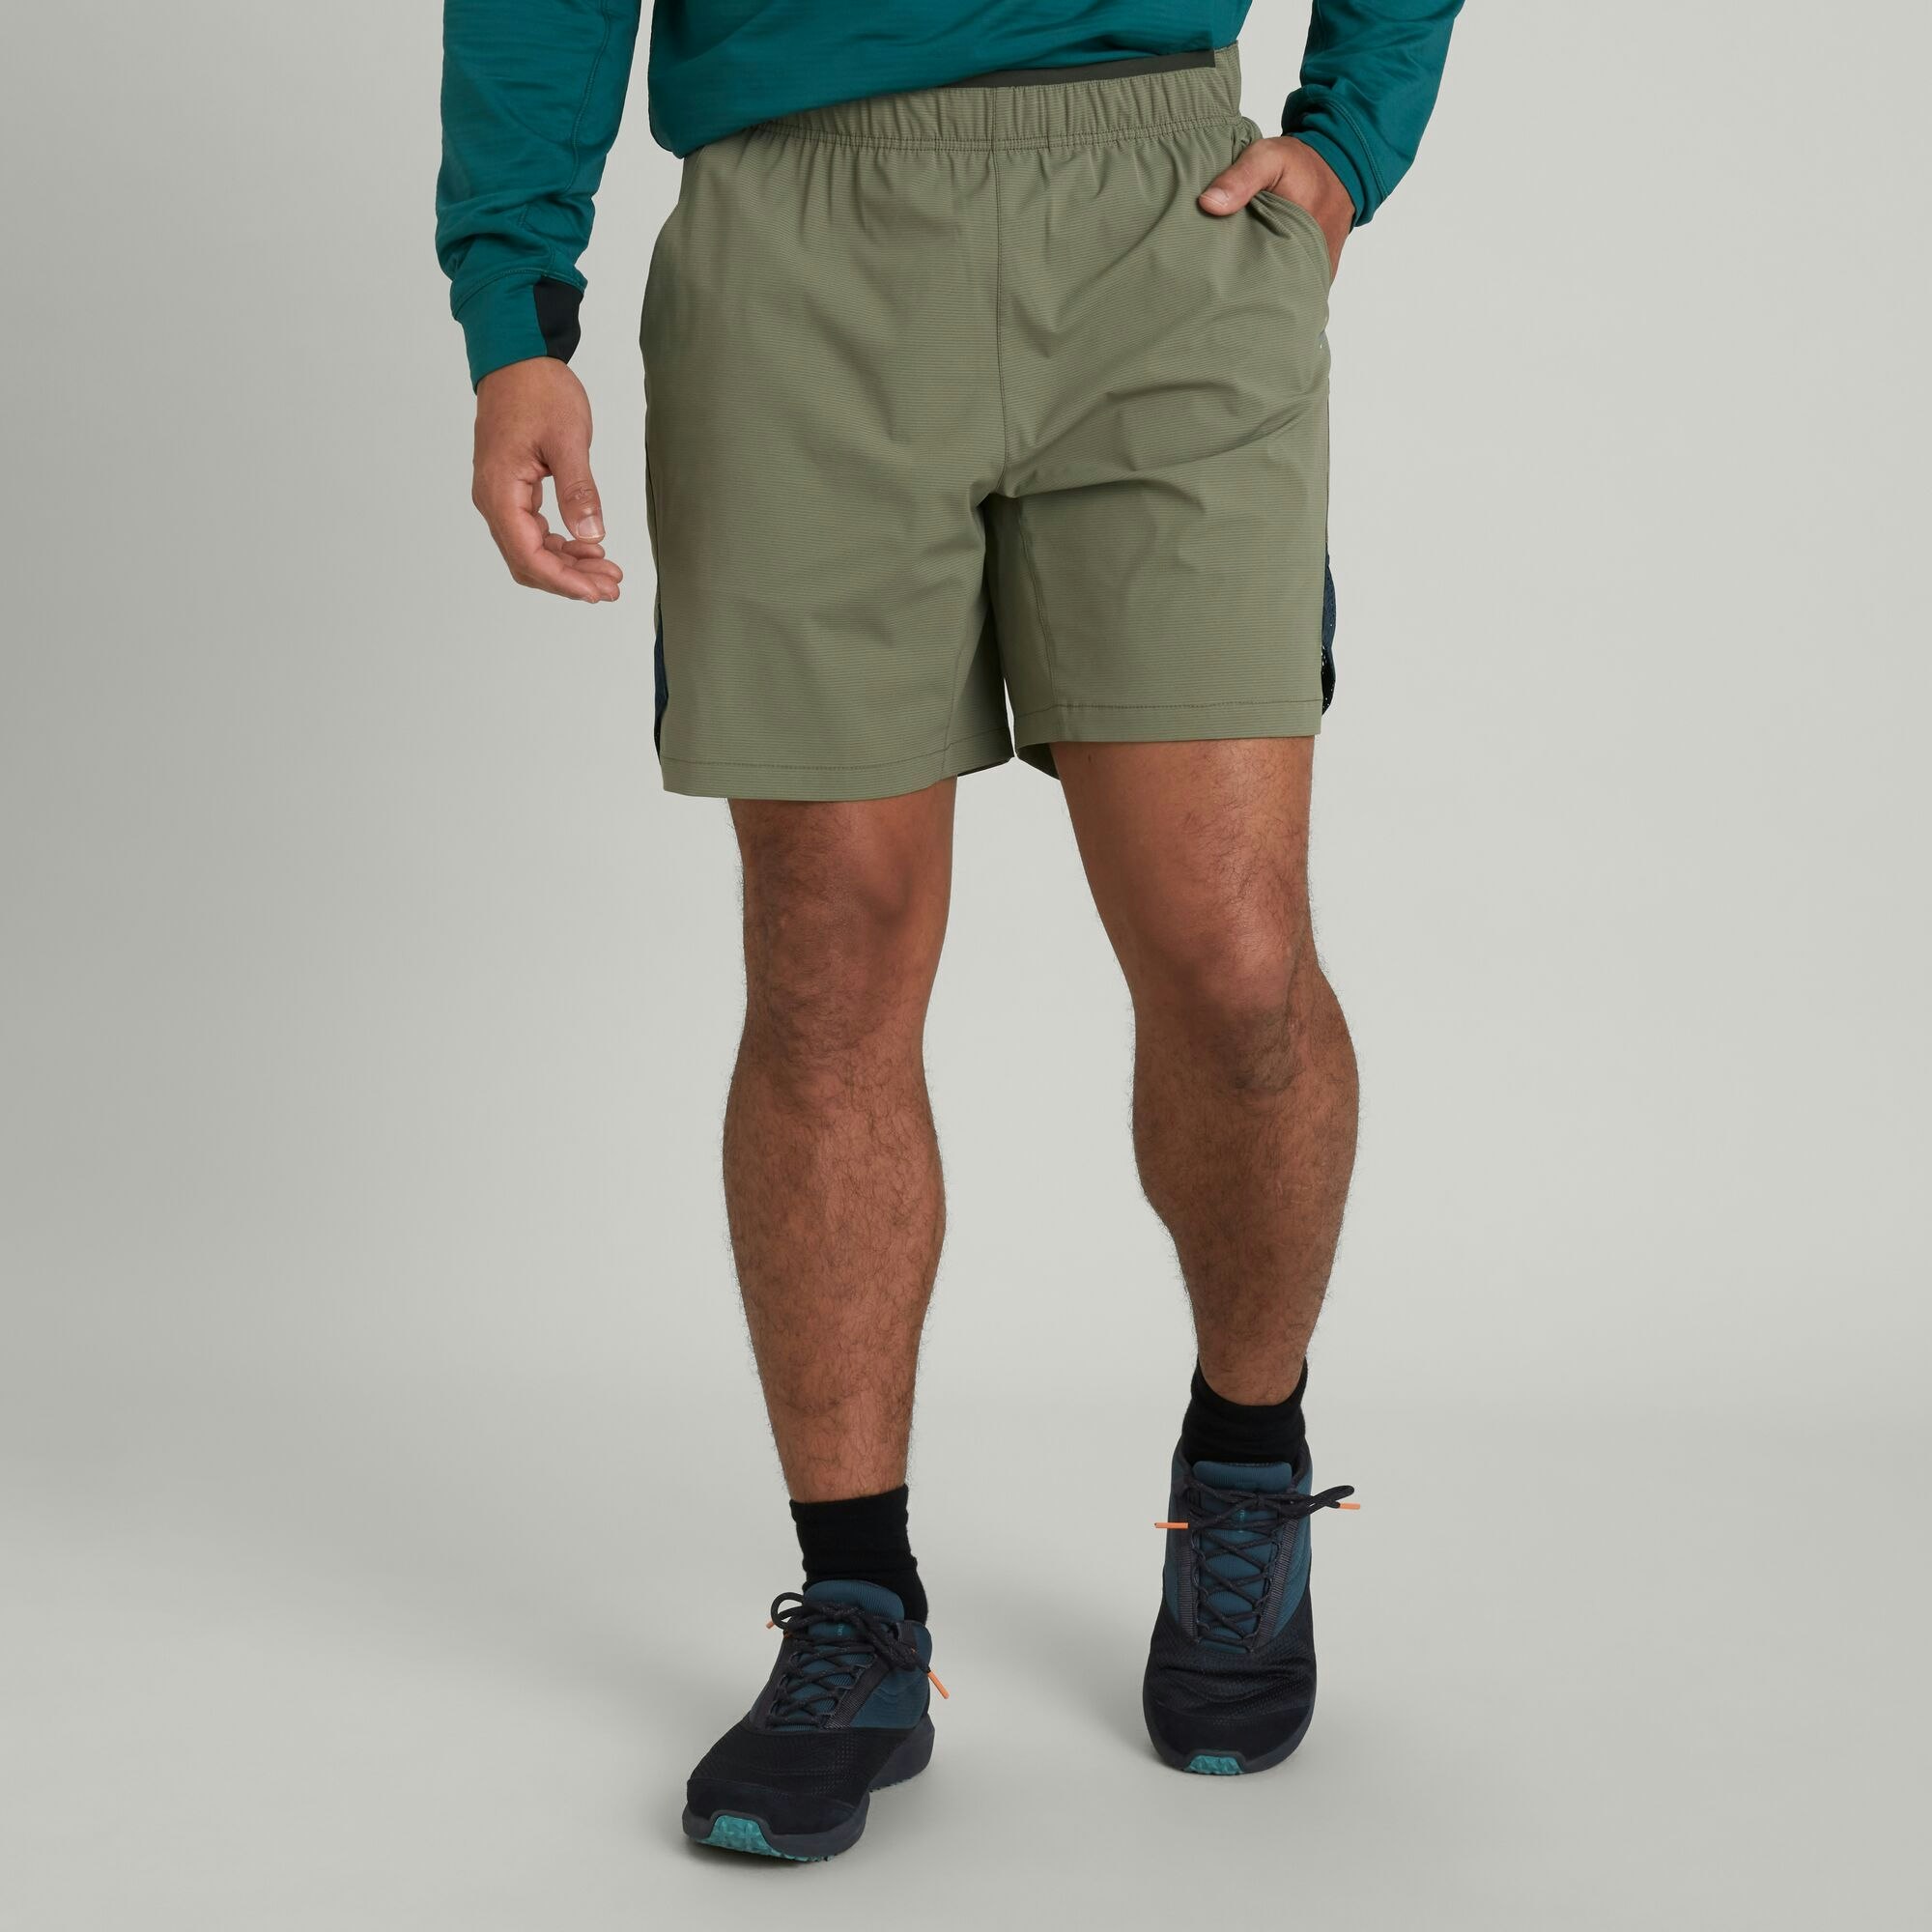 Men's Travel shorts